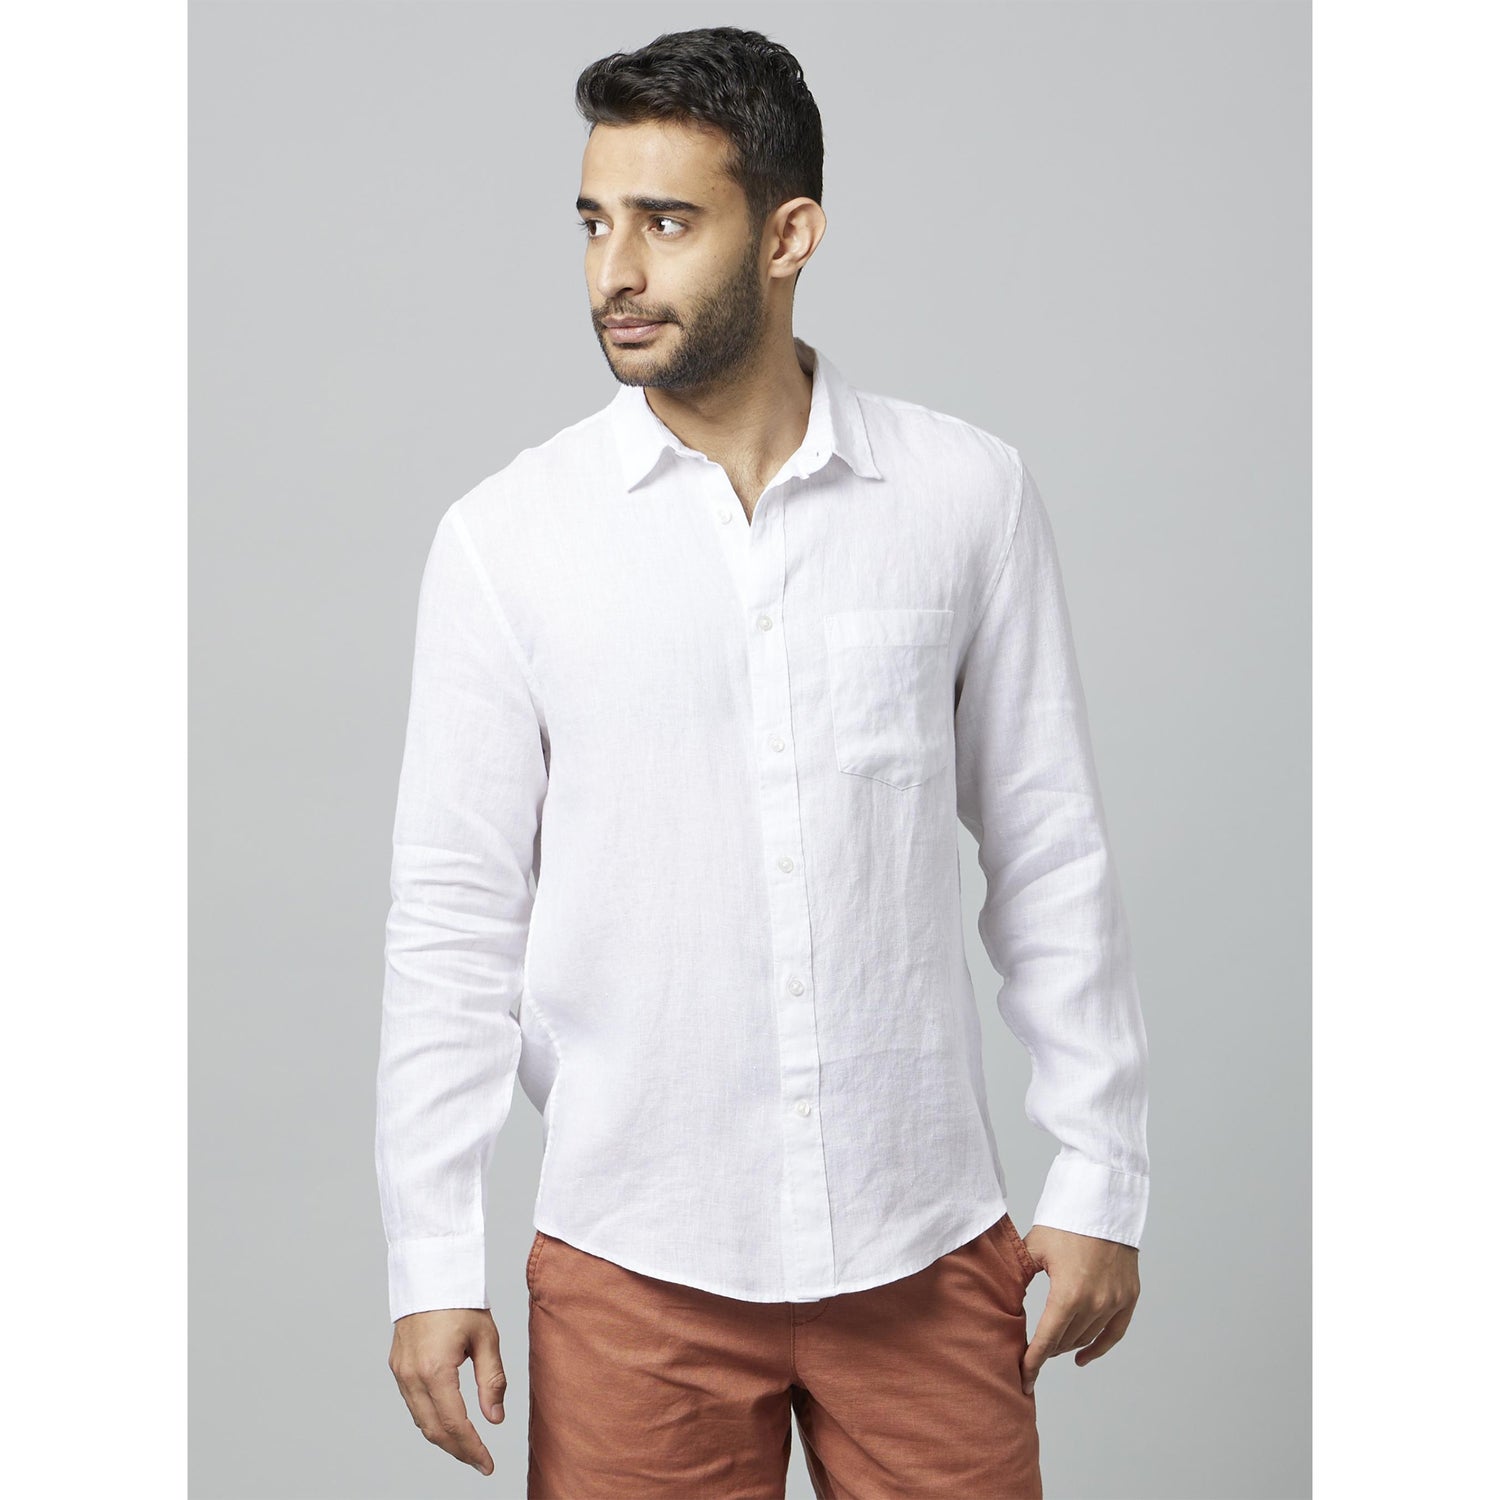 White Classic Spread Collar Linen Casual Shirt (DAFLIX)